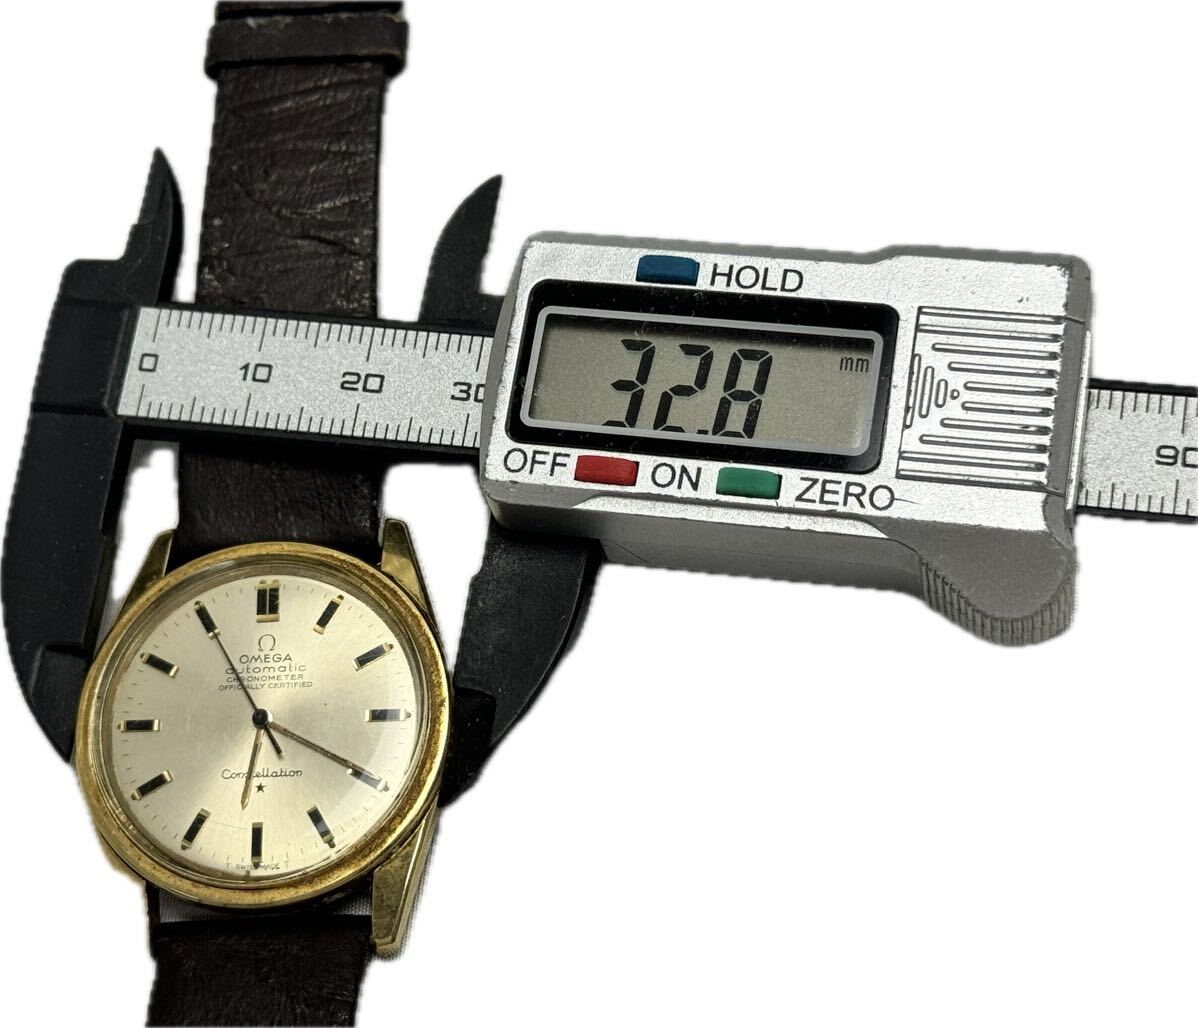 SG-599 OMEGA オメガ コンステレーション クロノメーター 167.021 稼働 現状 AT 自動巻 金メダリオン 純正バックル シルバー文字盤 腕時計の画像7